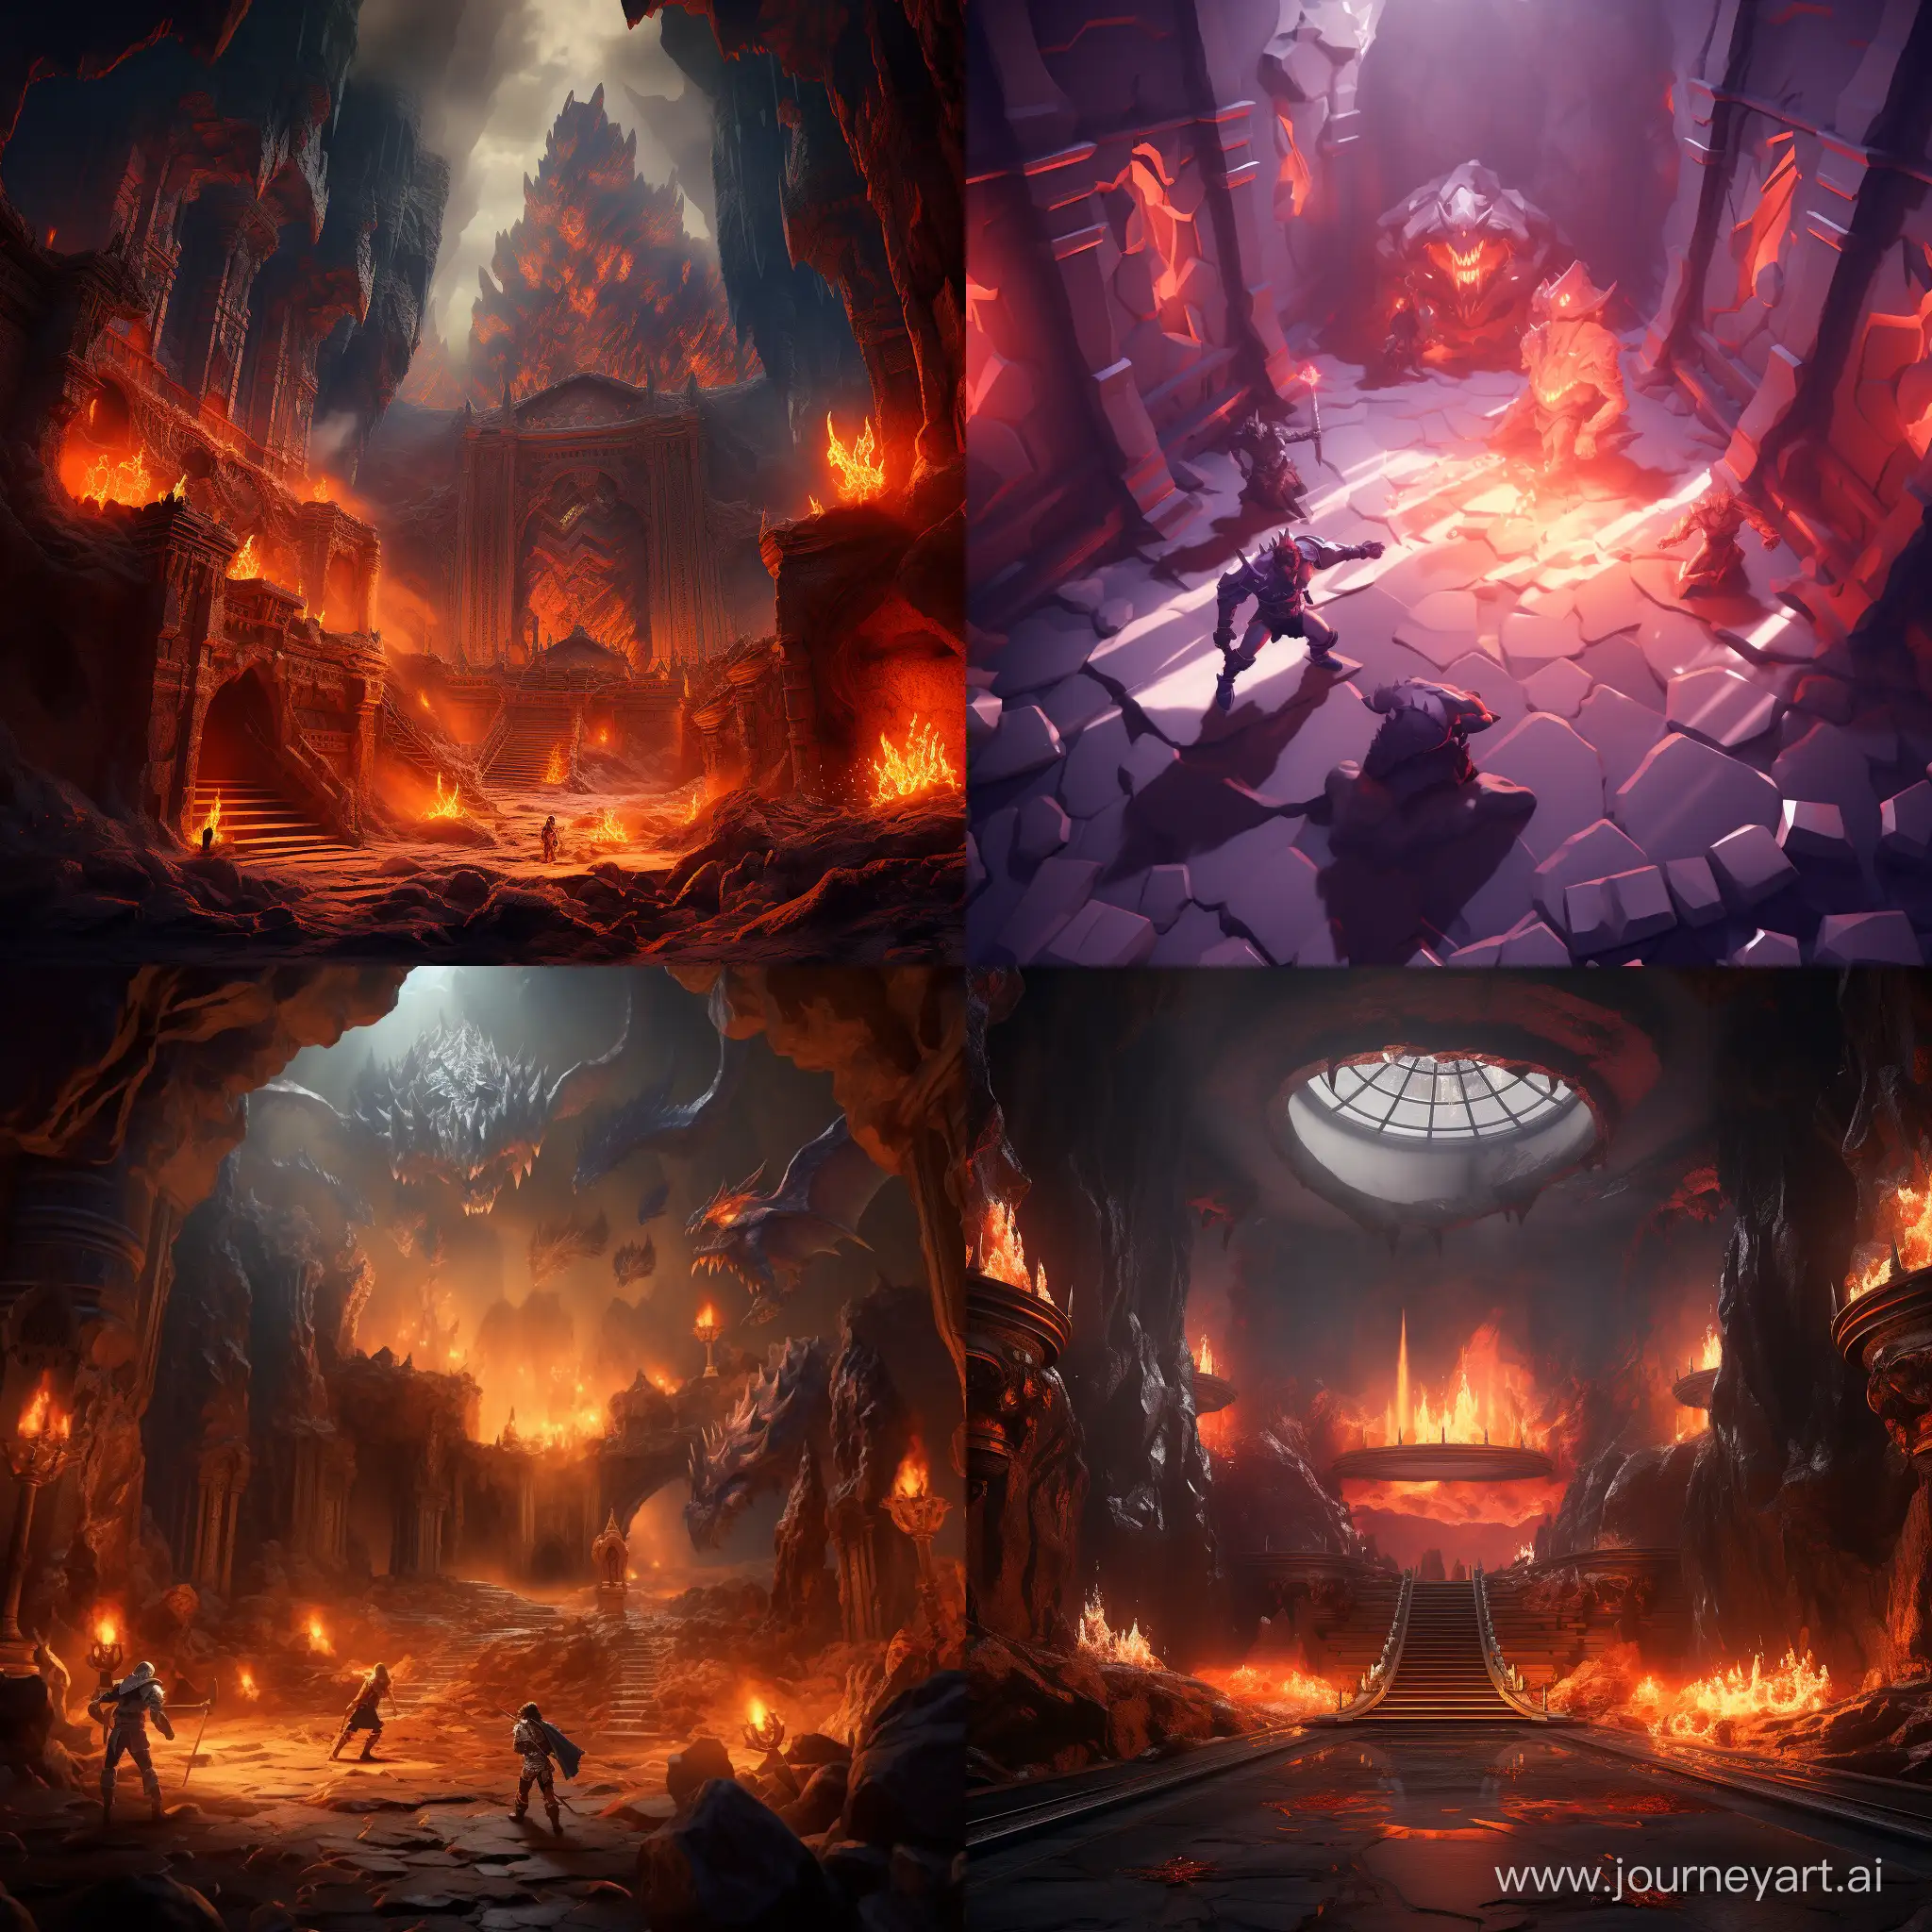  beautiful lighting, castle room, lava floor, heroes rush into battle against Descent monsters